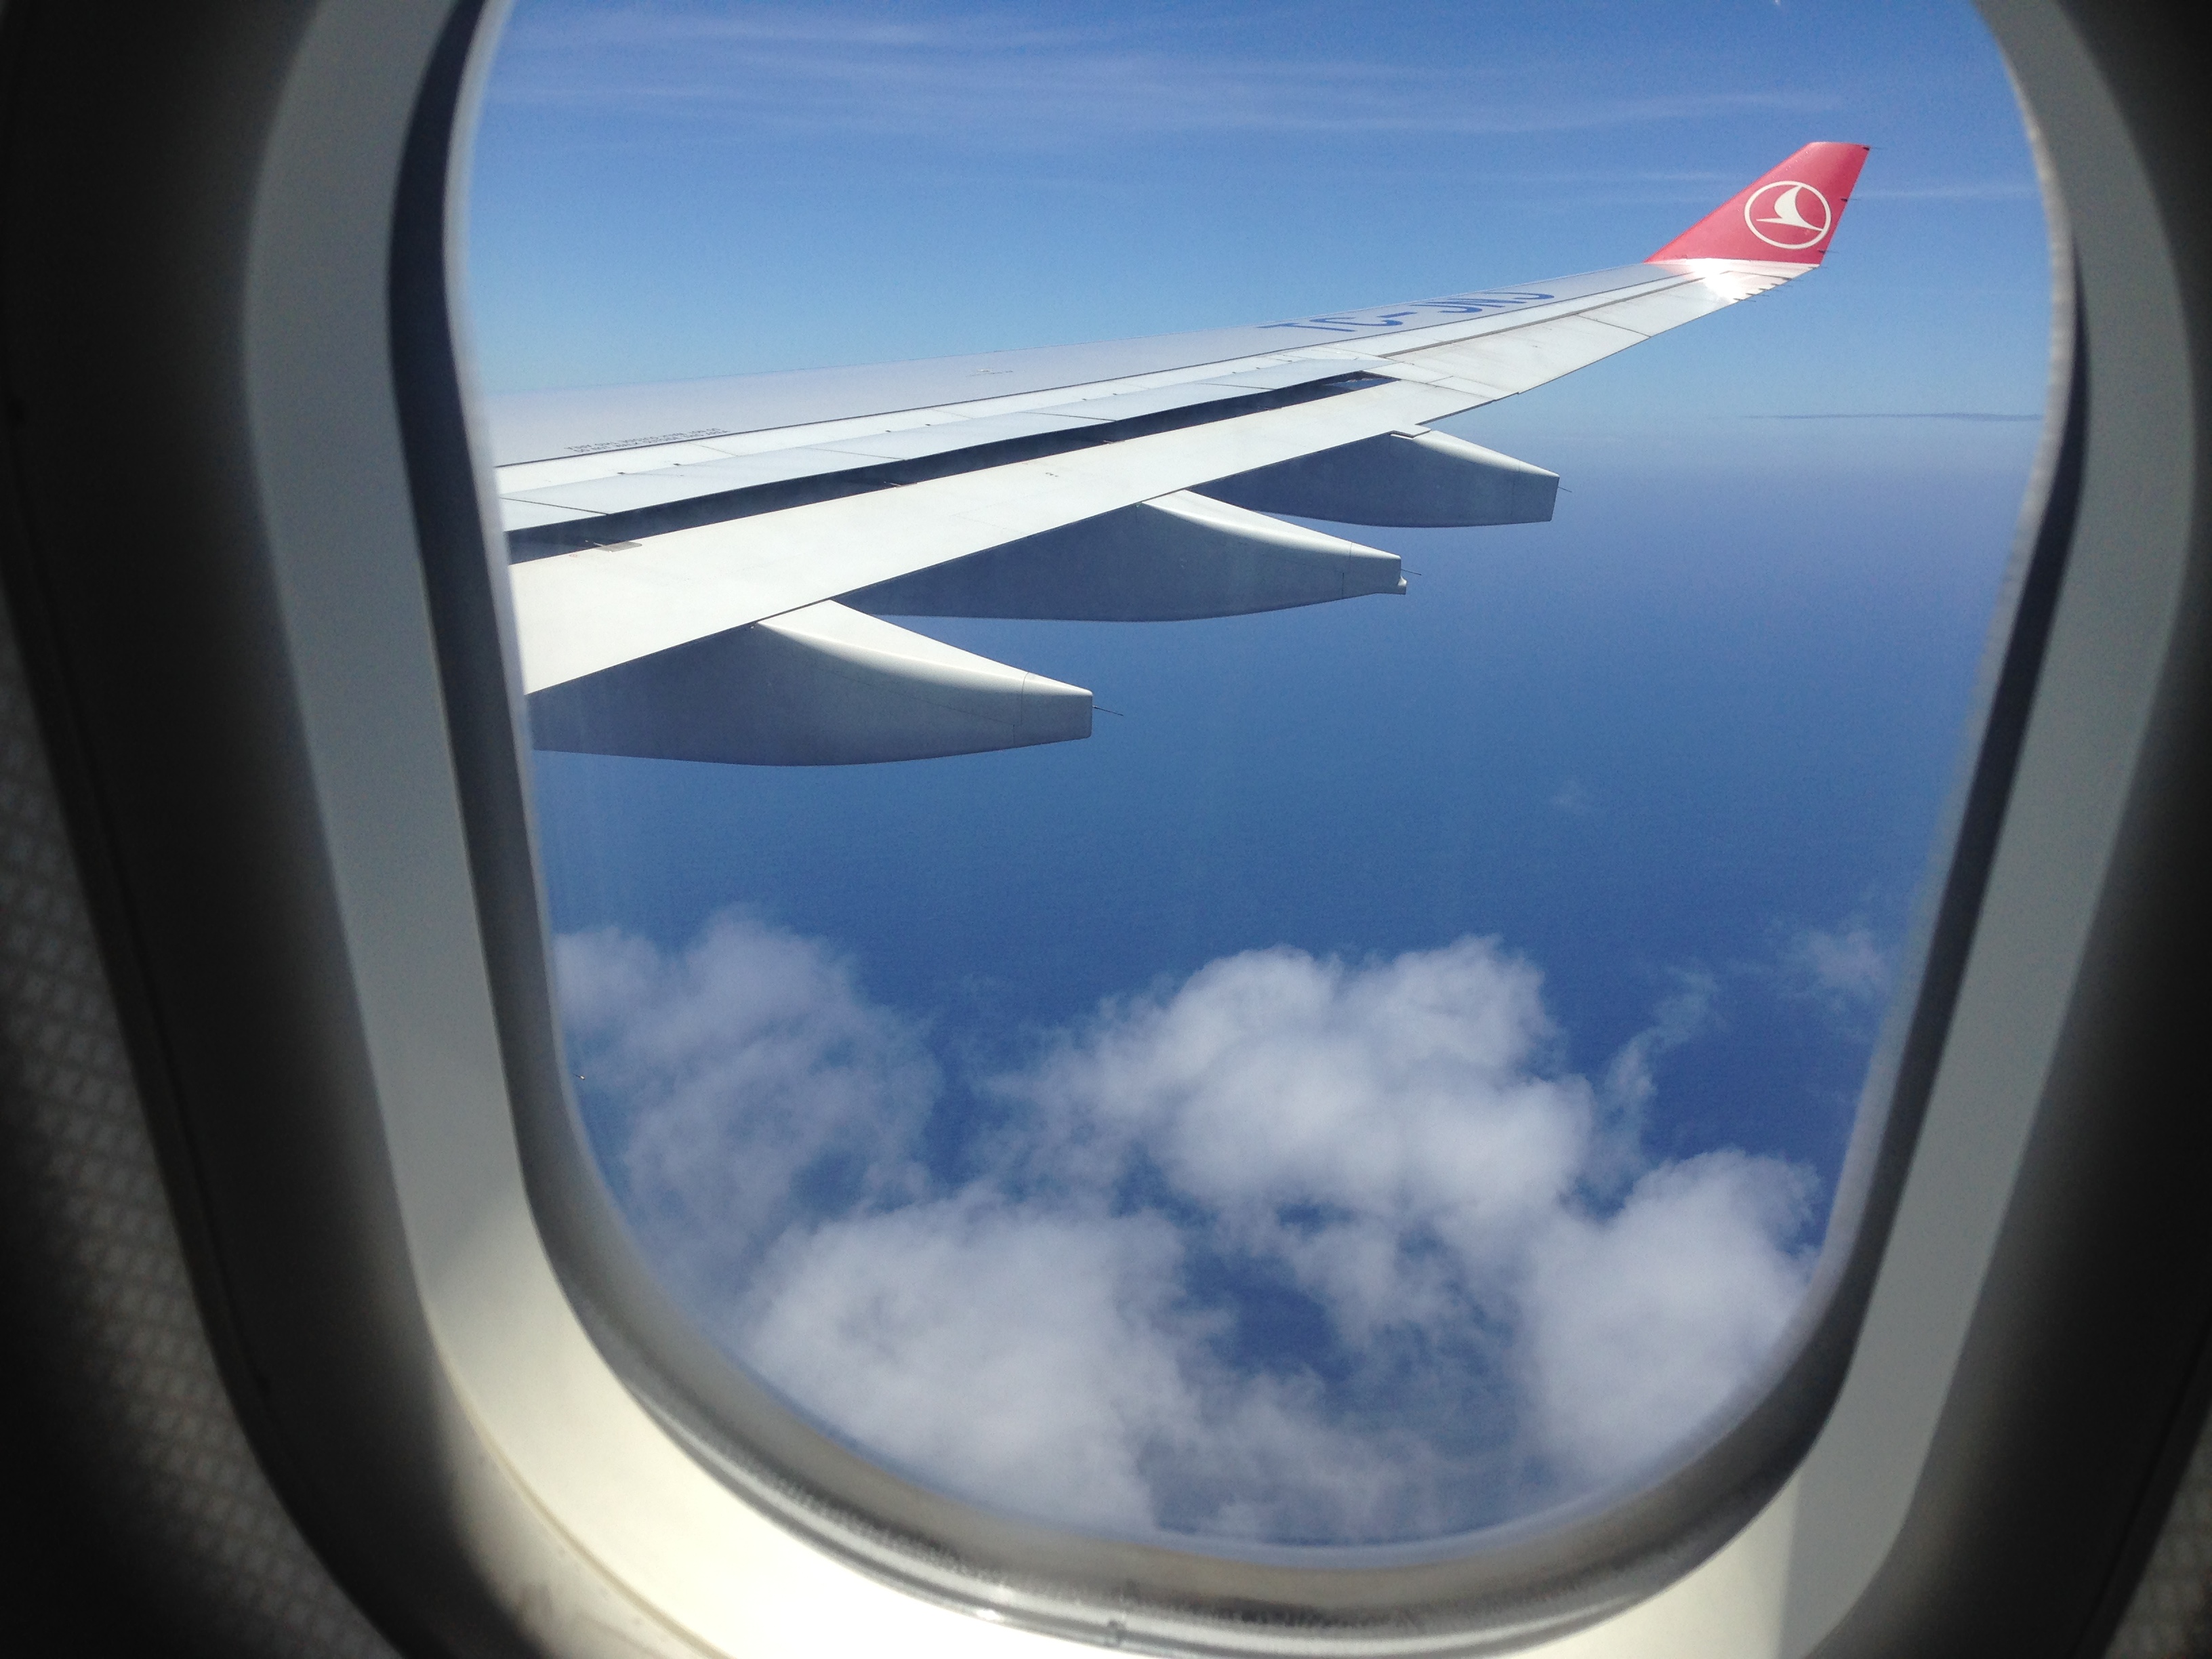 THY_Turkish Airlines_Airbus A330_Window View_Istanbul_IST_Mauritius_MRU_Jan 2016_002